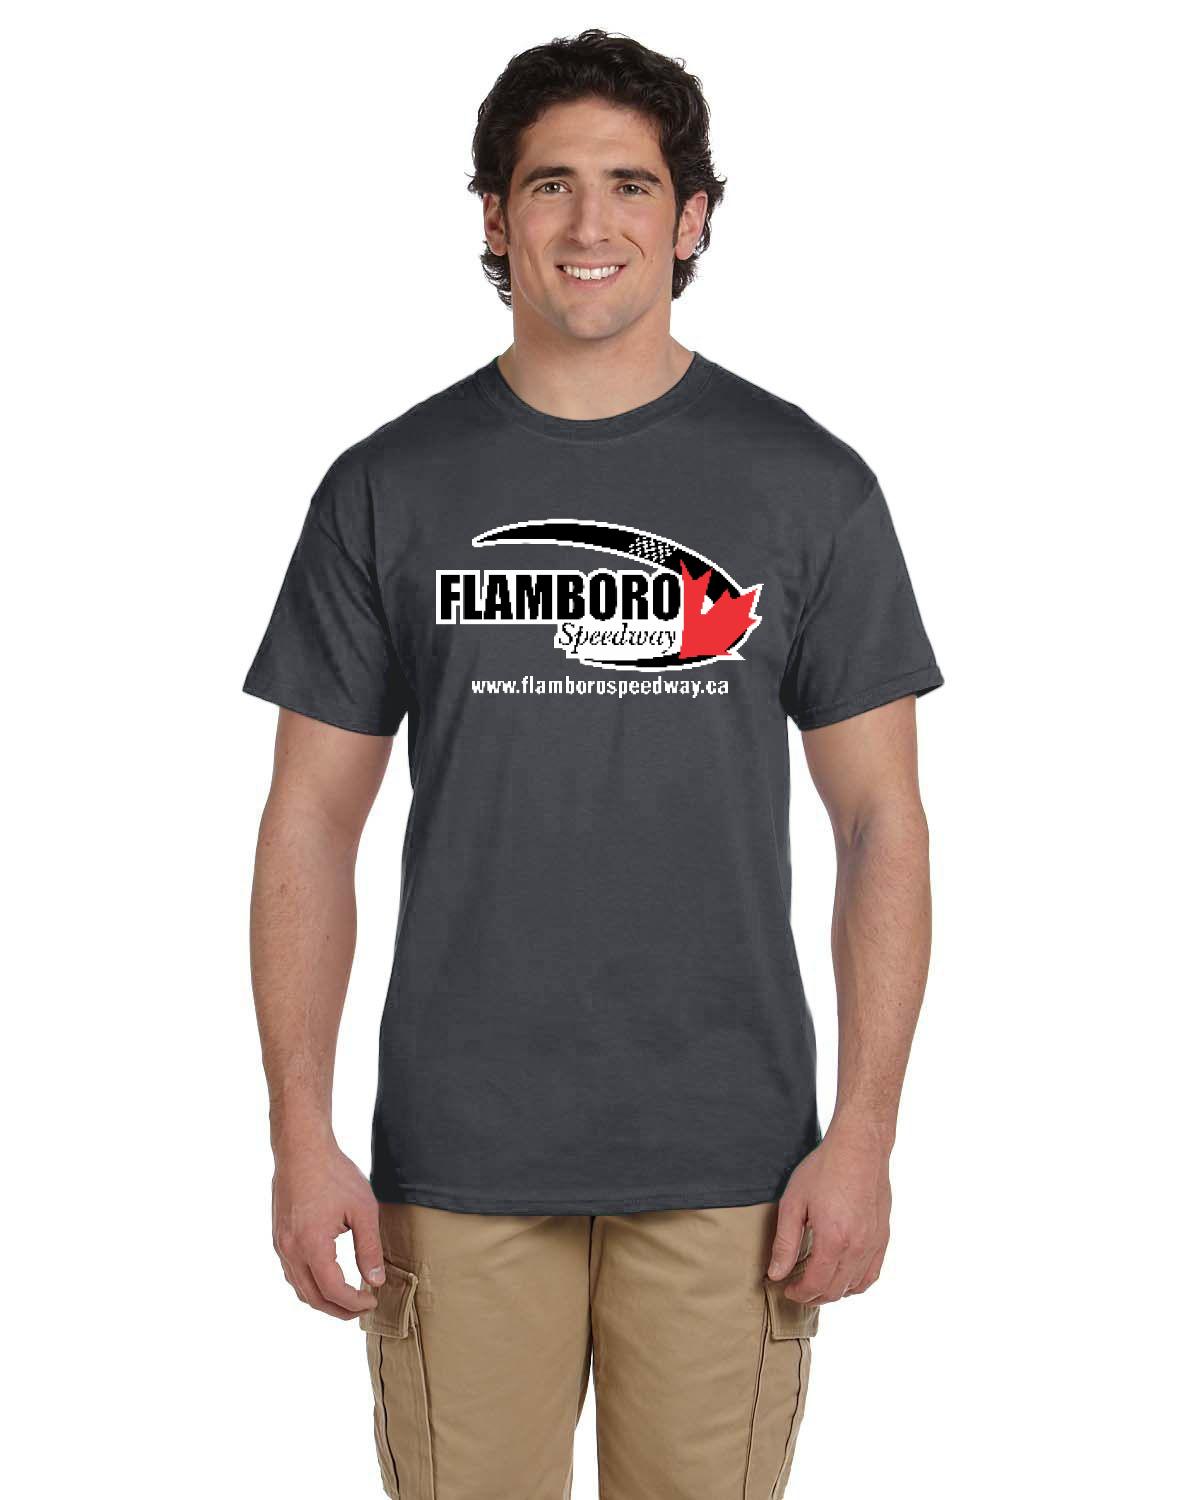 Flamboro Speedway Men's T-Shirt